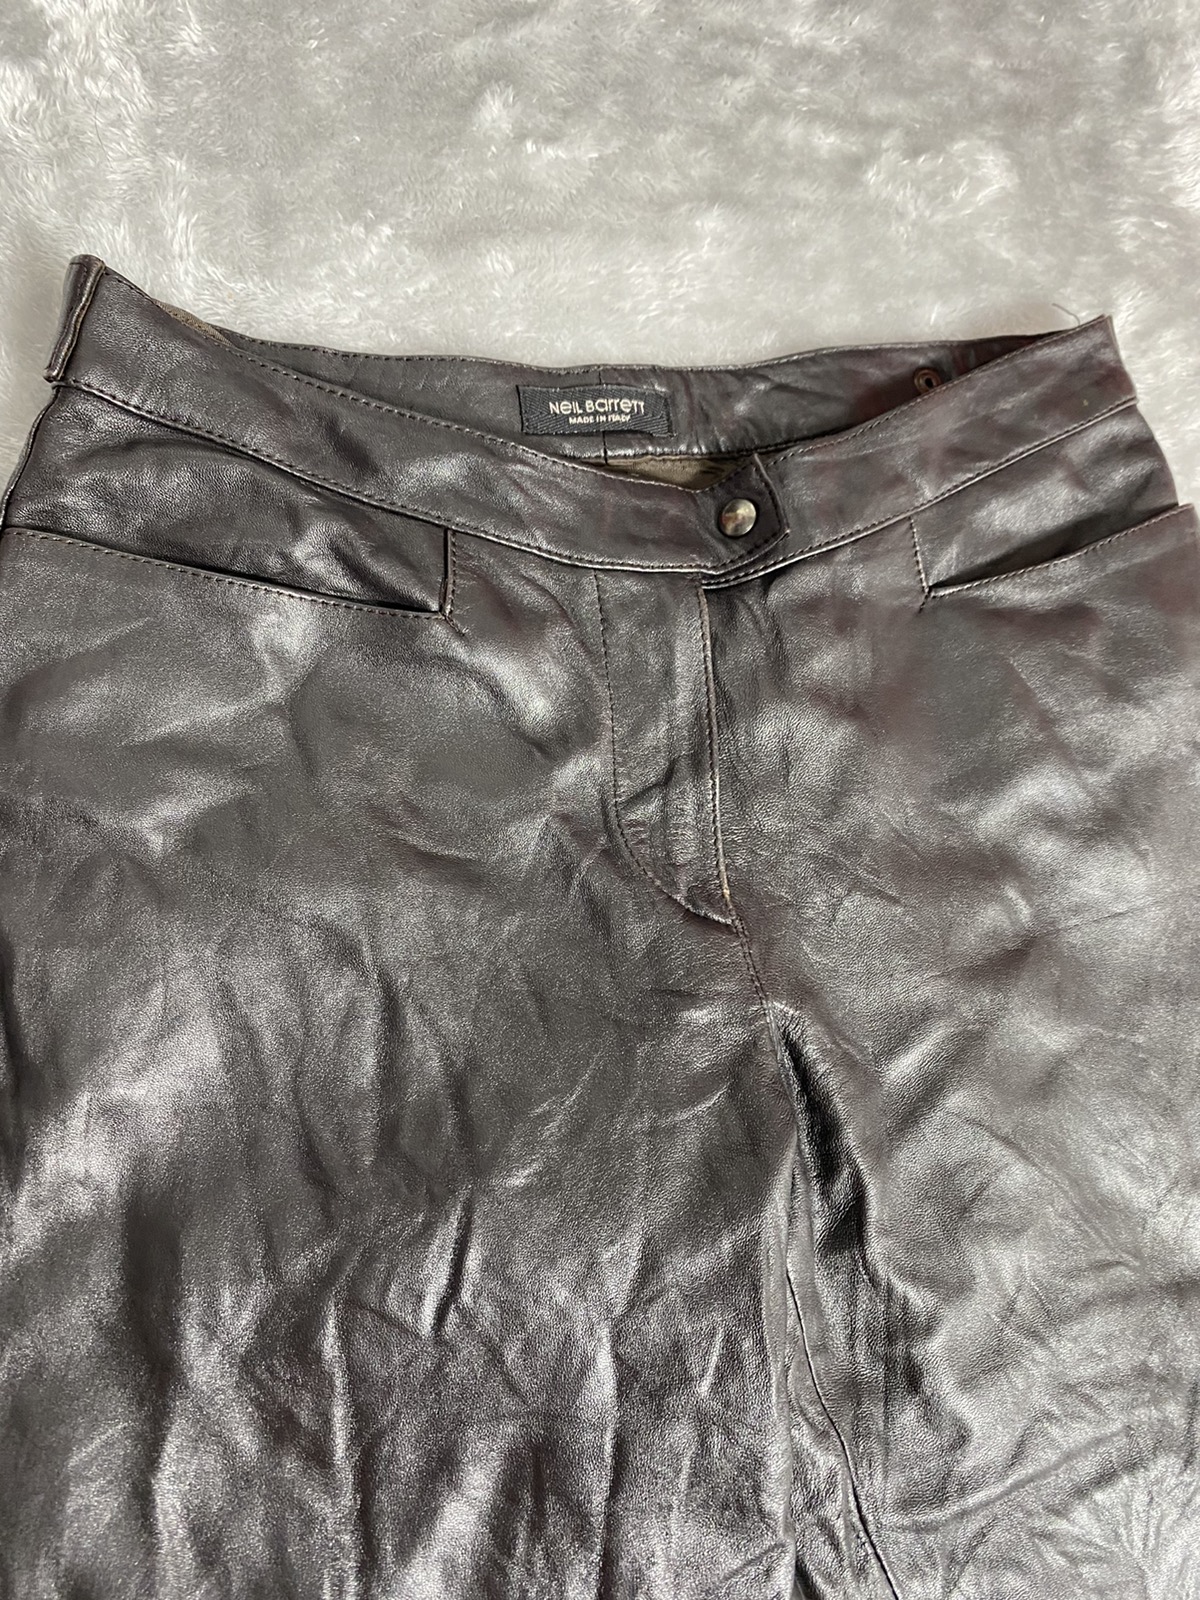 Neil Barrett Leather Pants. S106 - 4